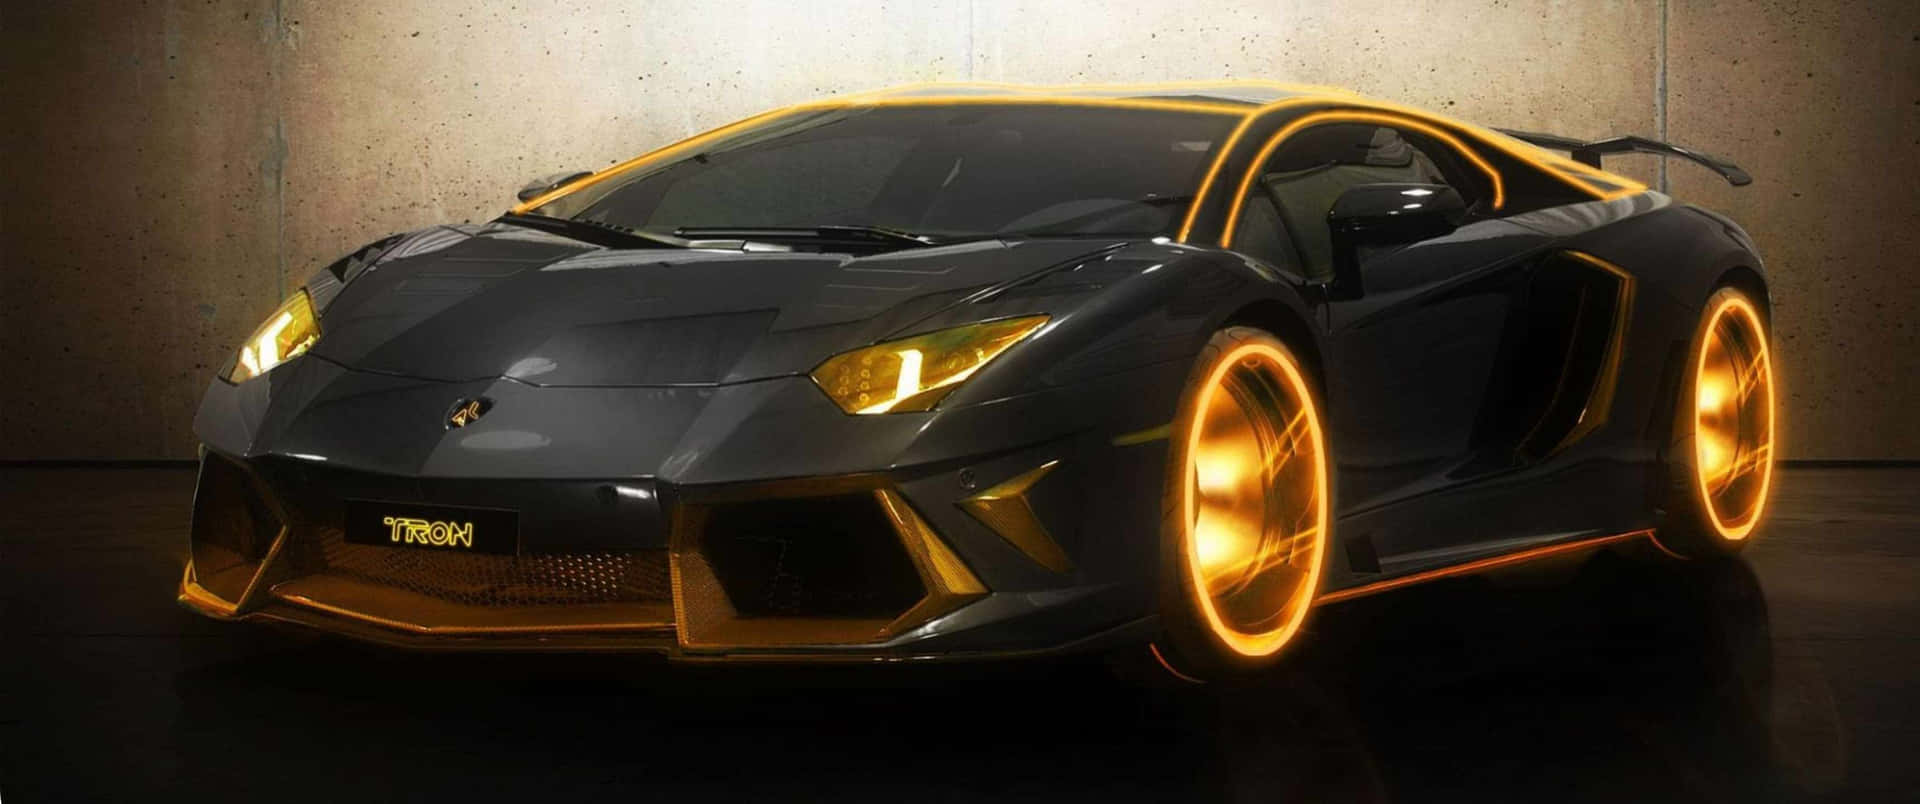 Velocidady Estilo: Atraviesa La Vida A Toda Velocidad Con Este Lujoso Lamborghini.